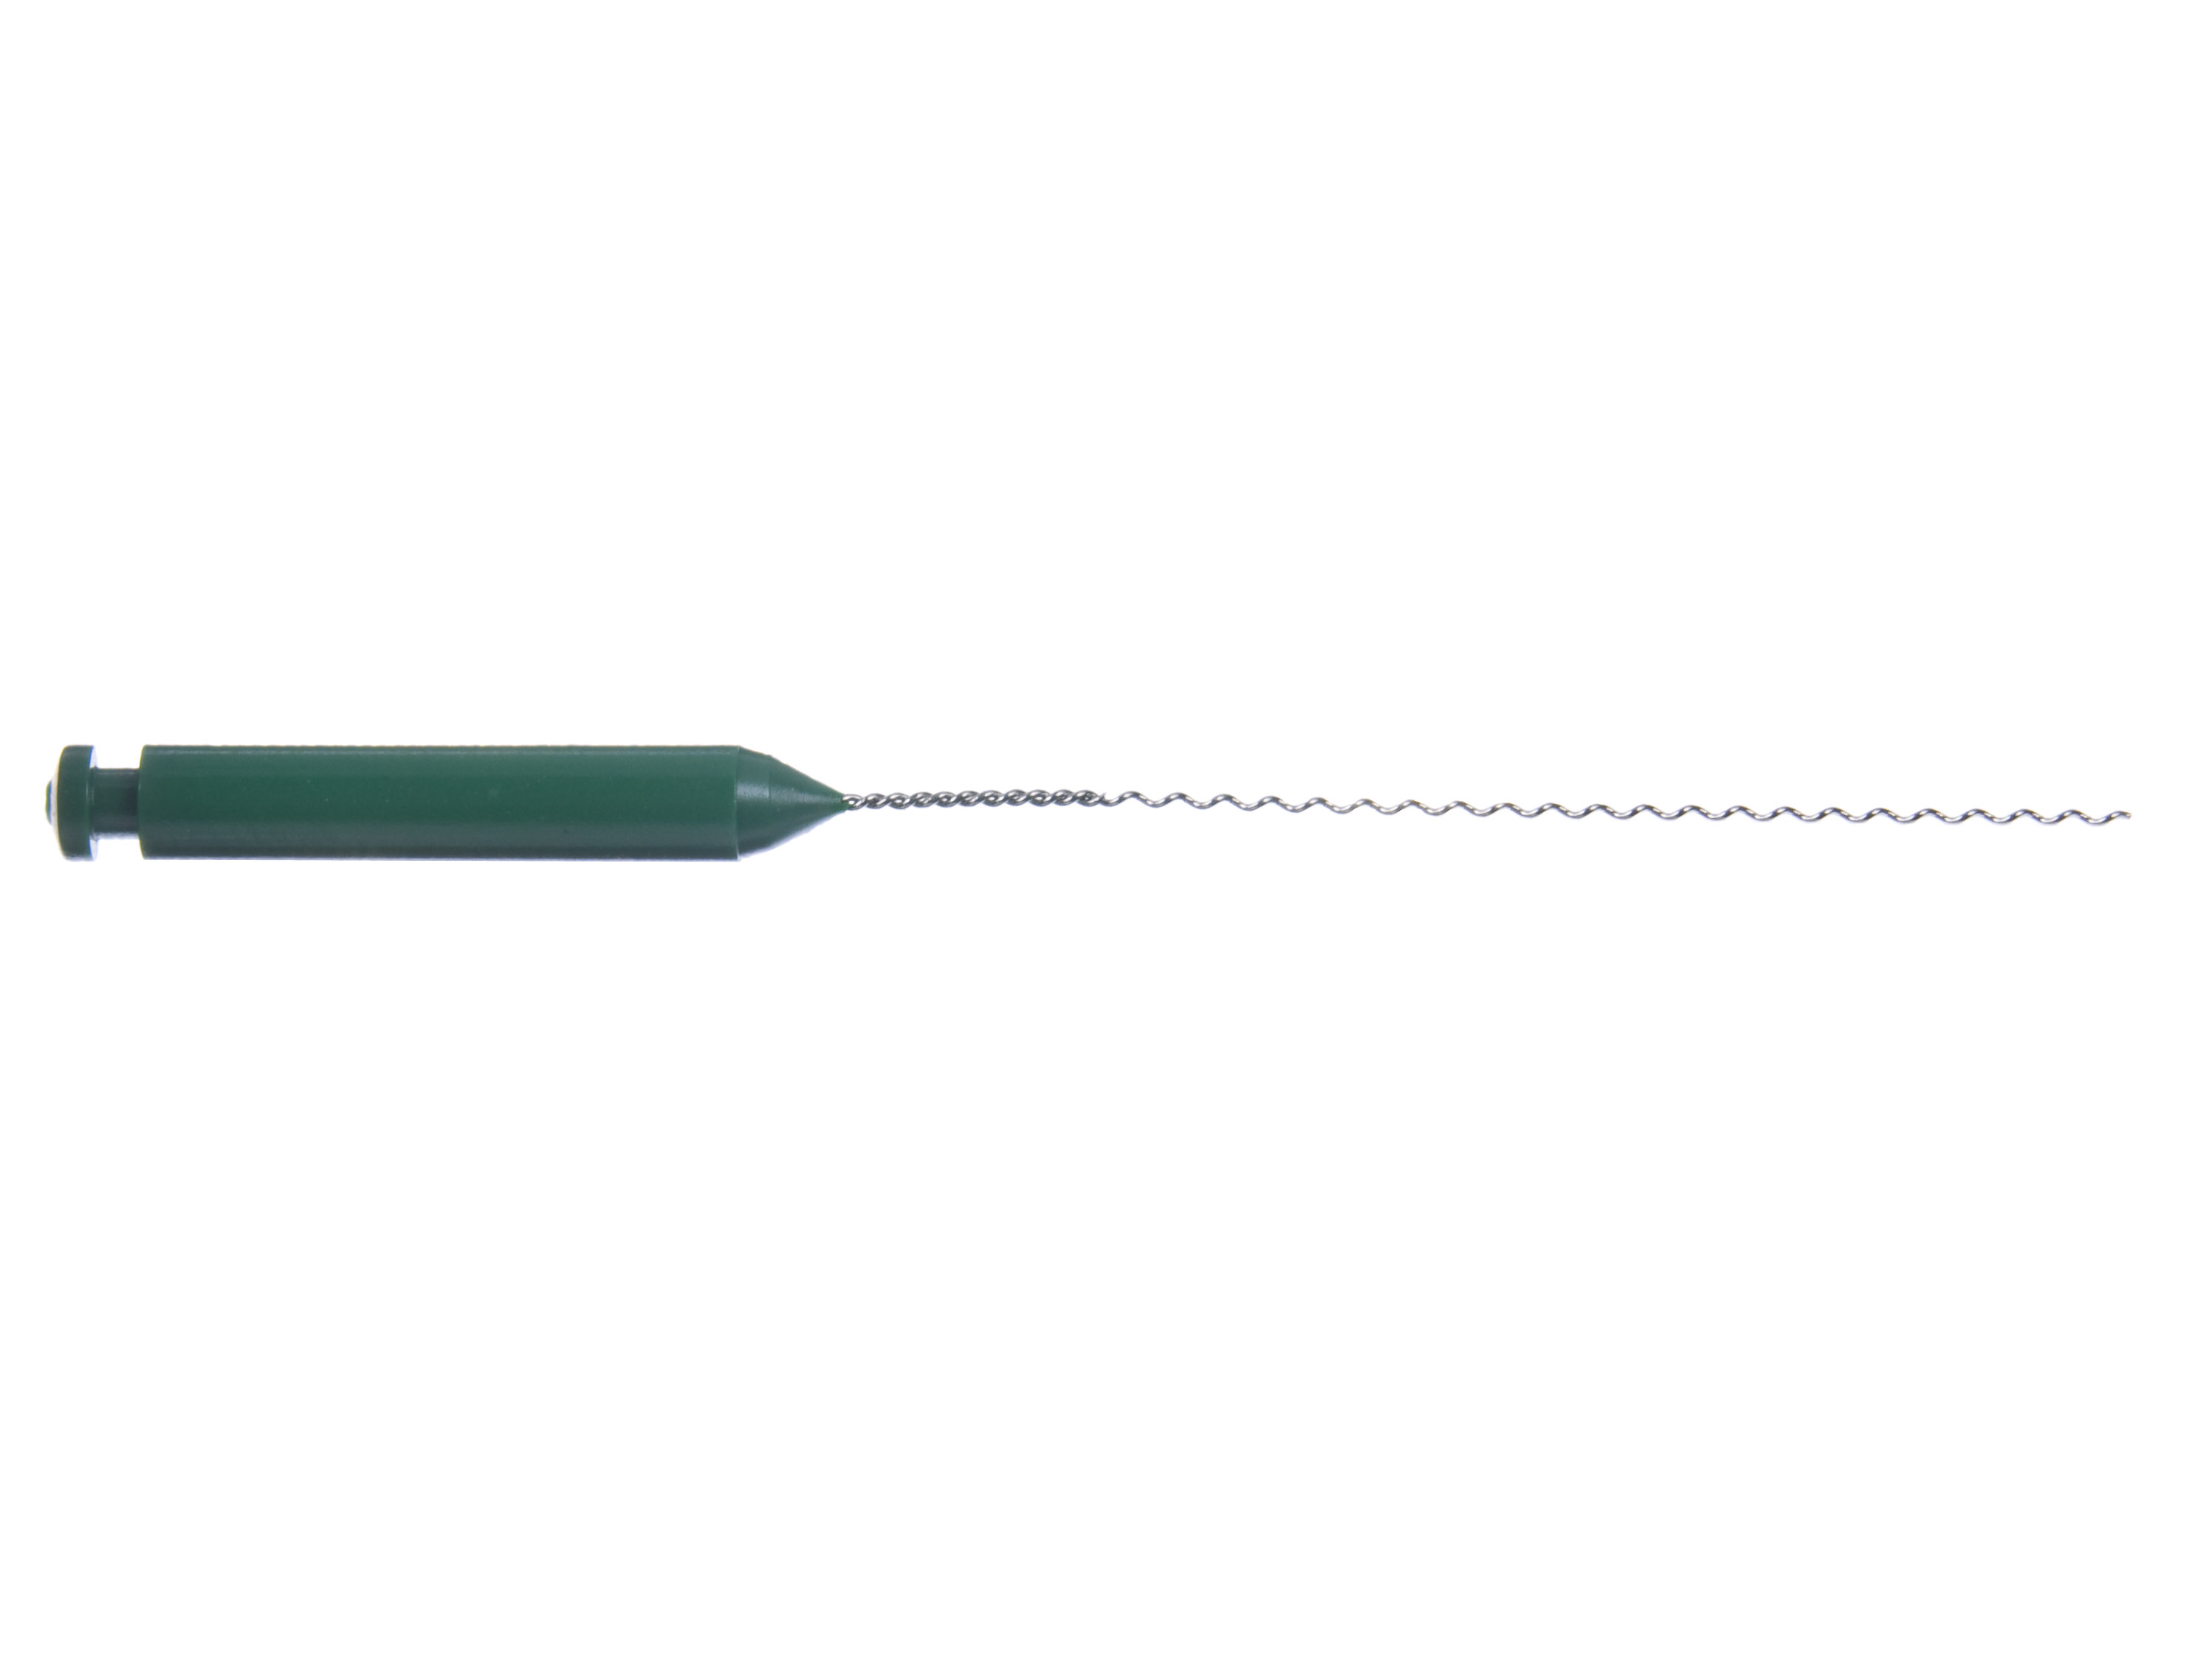 Spiralfillers n35 L:29 mm ISO col - инструменты эндодонтические